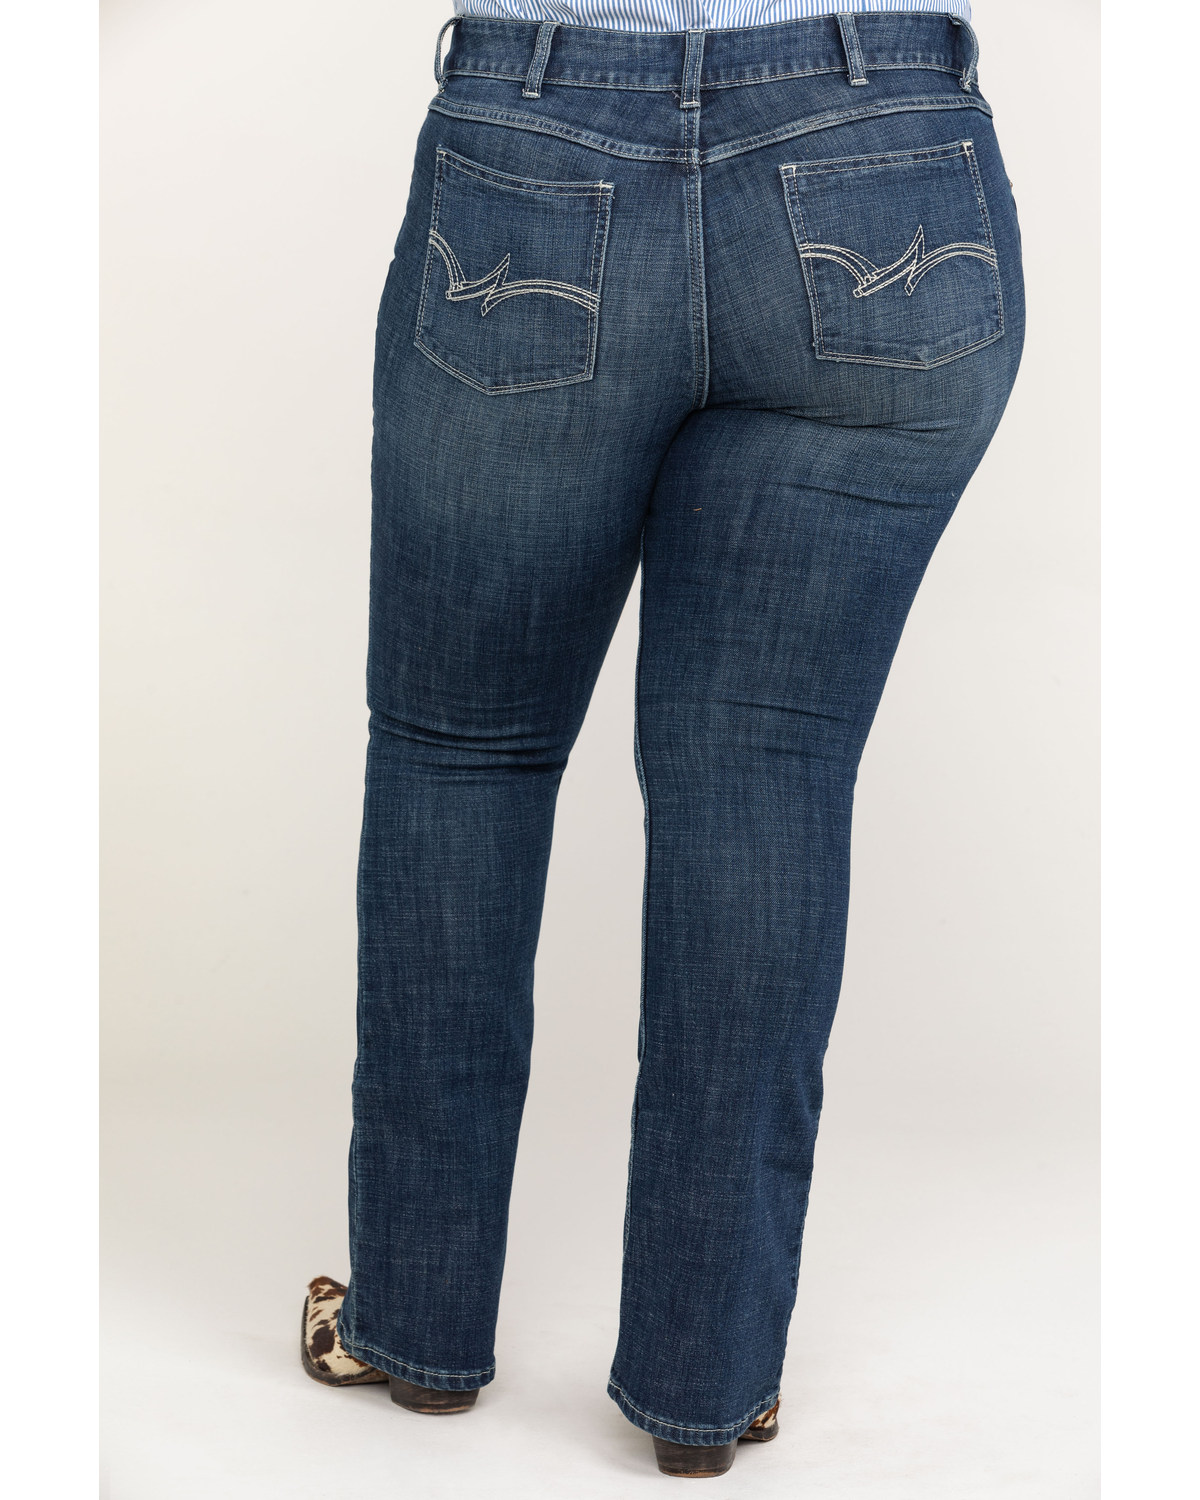 Wrangler Women's Dark Wash Bootcut Jeans